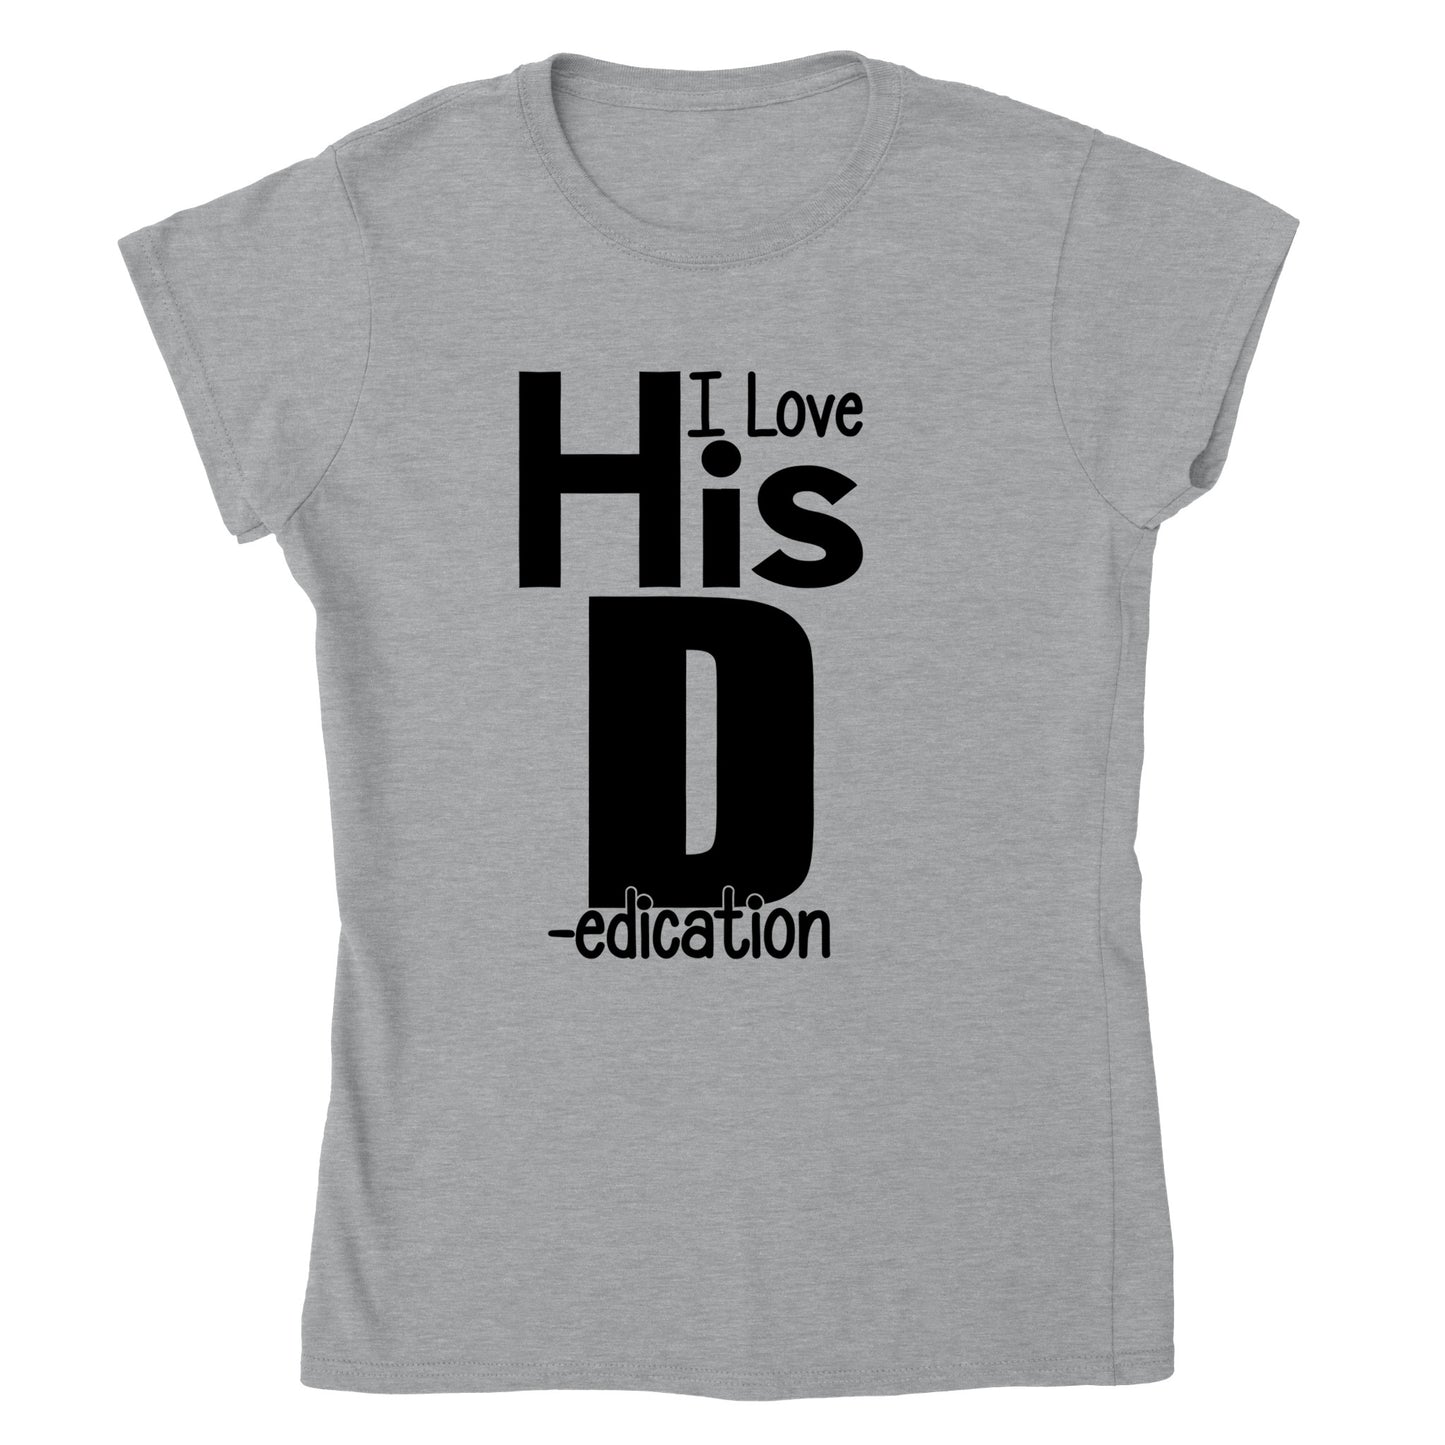 I Love His D - edication - Classic Womens Crewneck T-shirt - Mister Snarky's